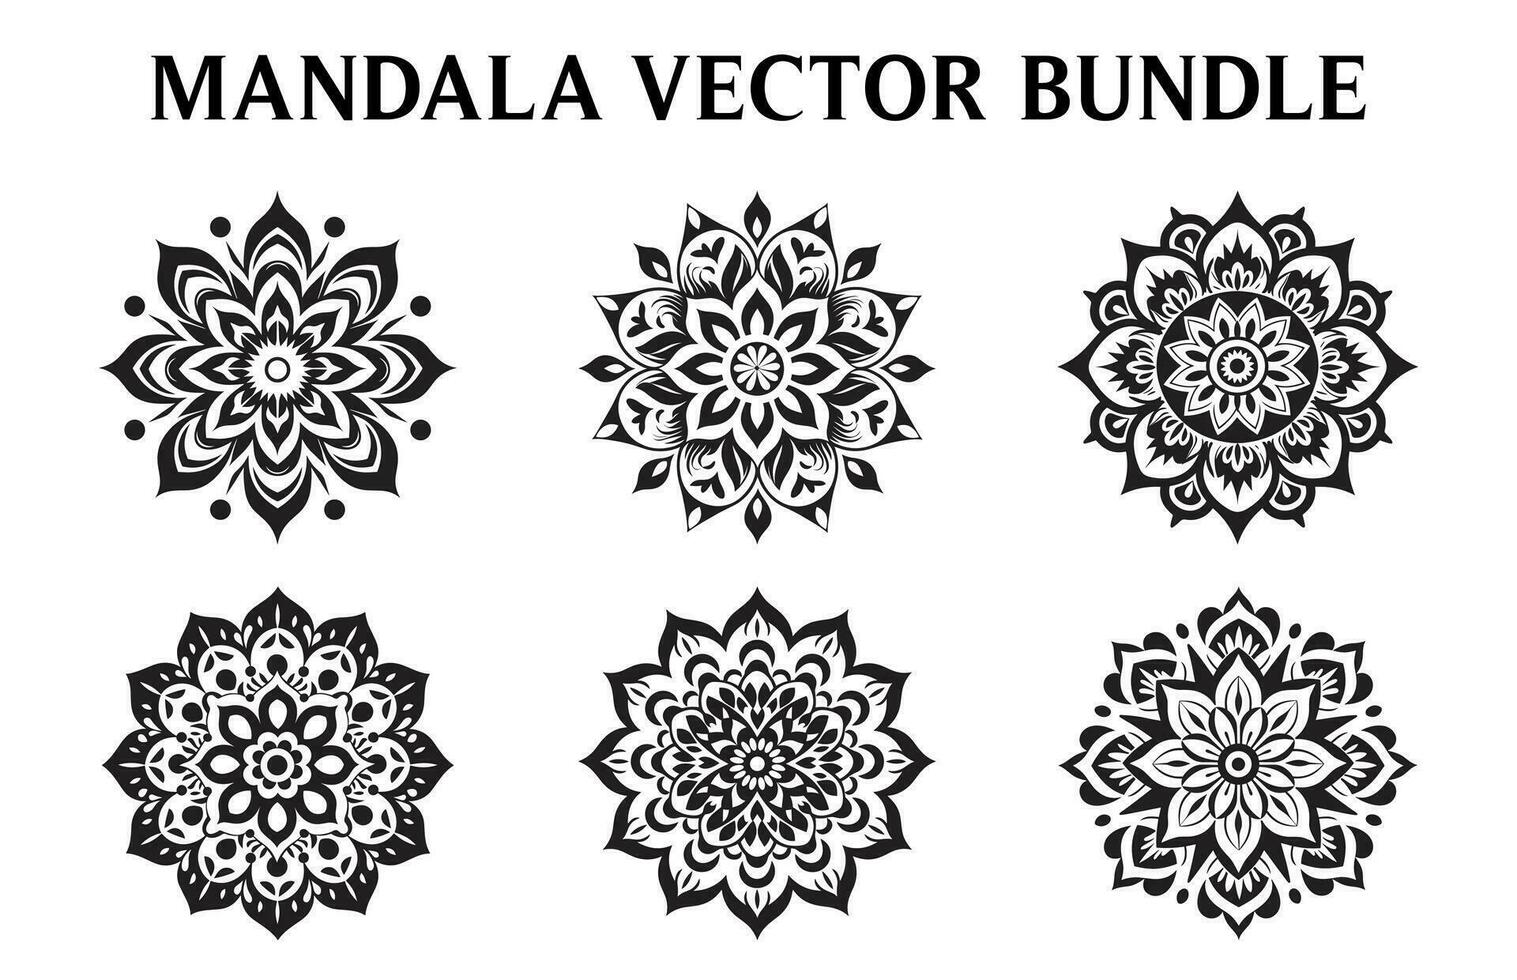 schwarz und Weiß Vektor Blumen- Mandala Kunst Design Satz, Jahrgang Kreis Mandala Kunst Vektor Illustration bündeln, einfach und minimal schön Mandala Symbol